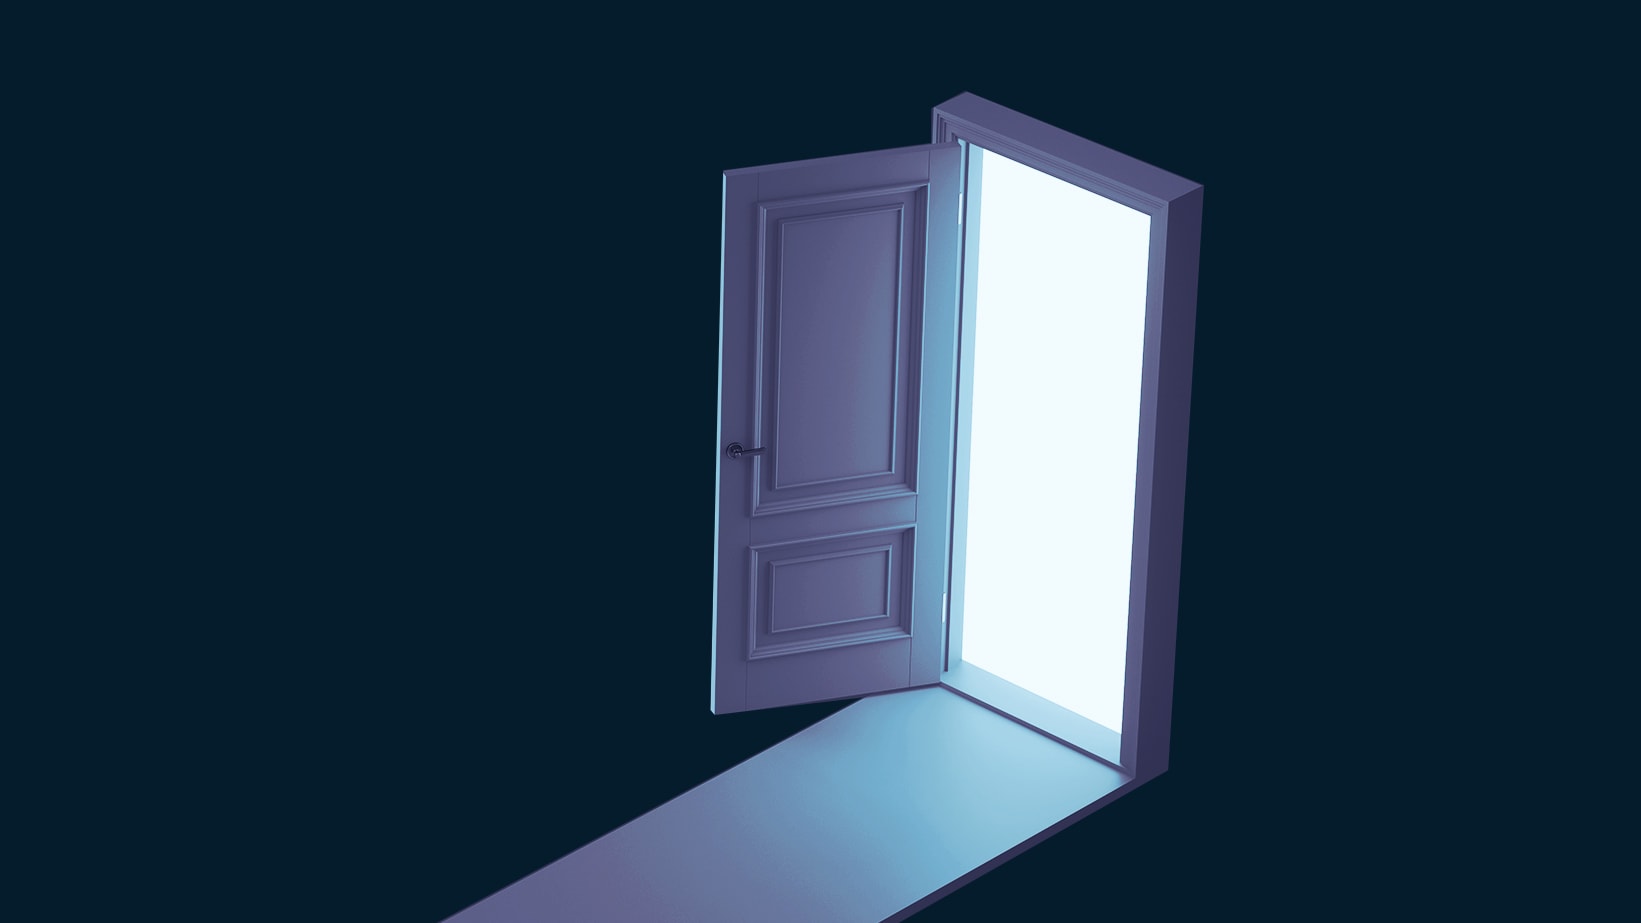 illustration of a dark room with an open door